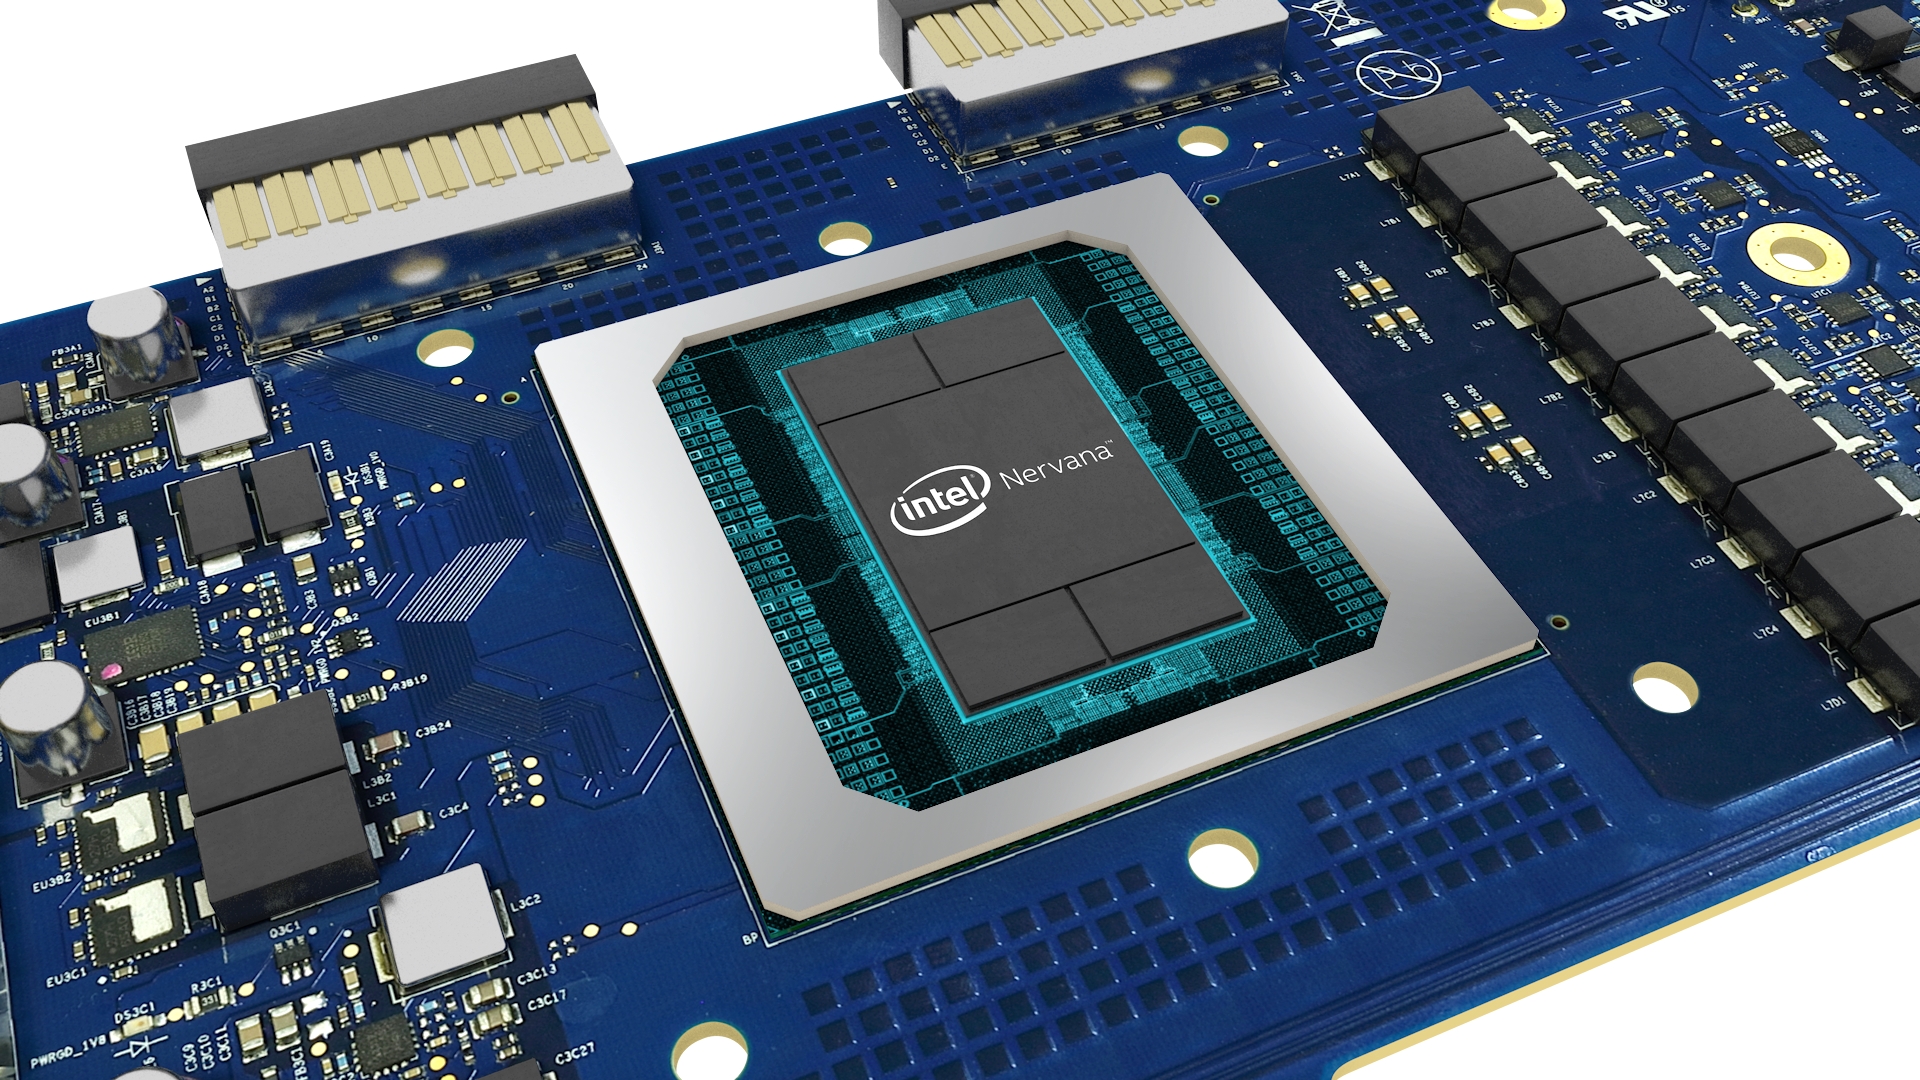 Intel-Nervana-neural-network-processor.jpg